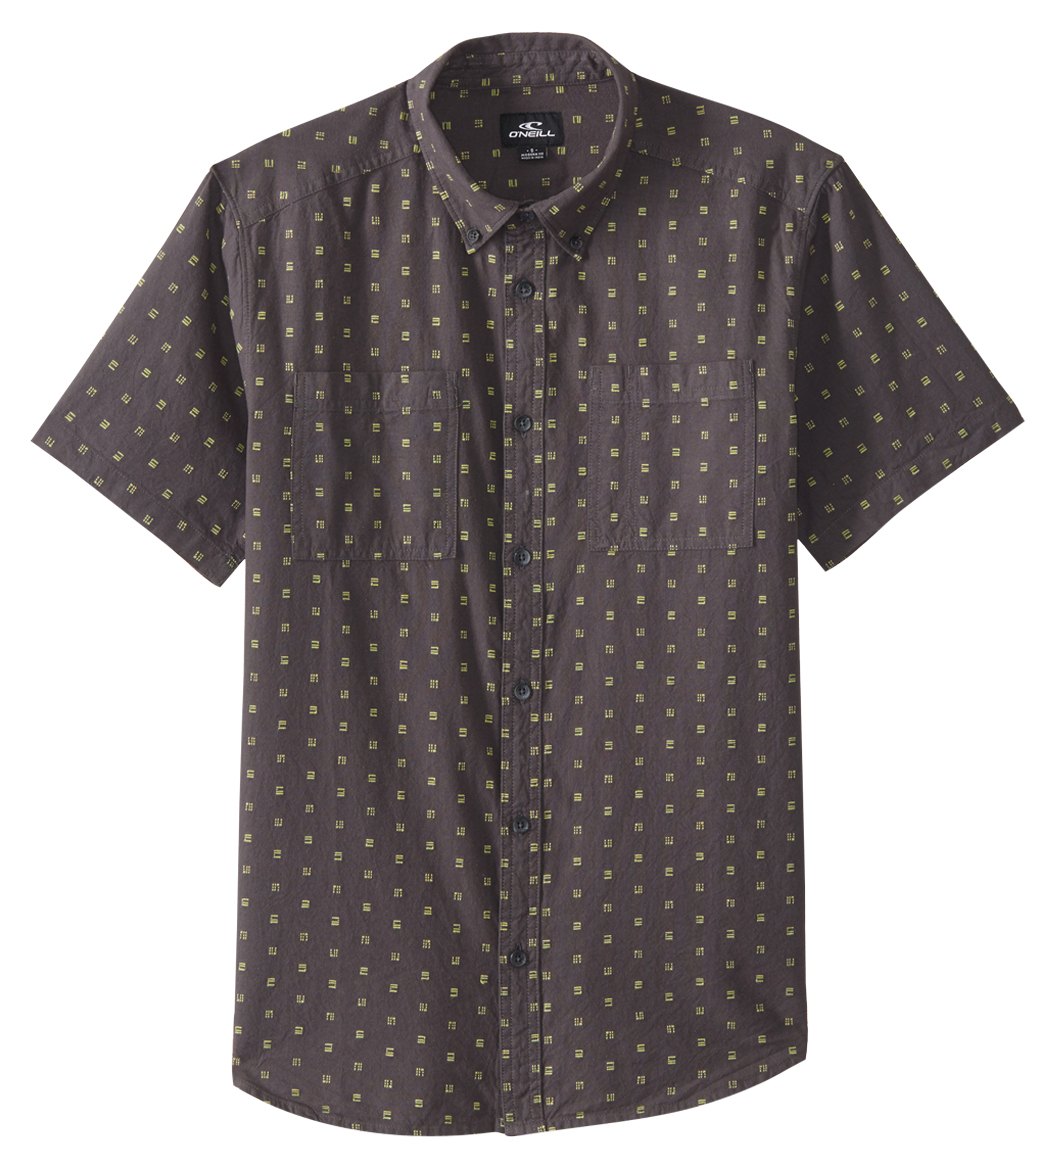 O'neill Men's Fifty Two Shirt - Asphalt Small Cotton - Swimoutlet.com